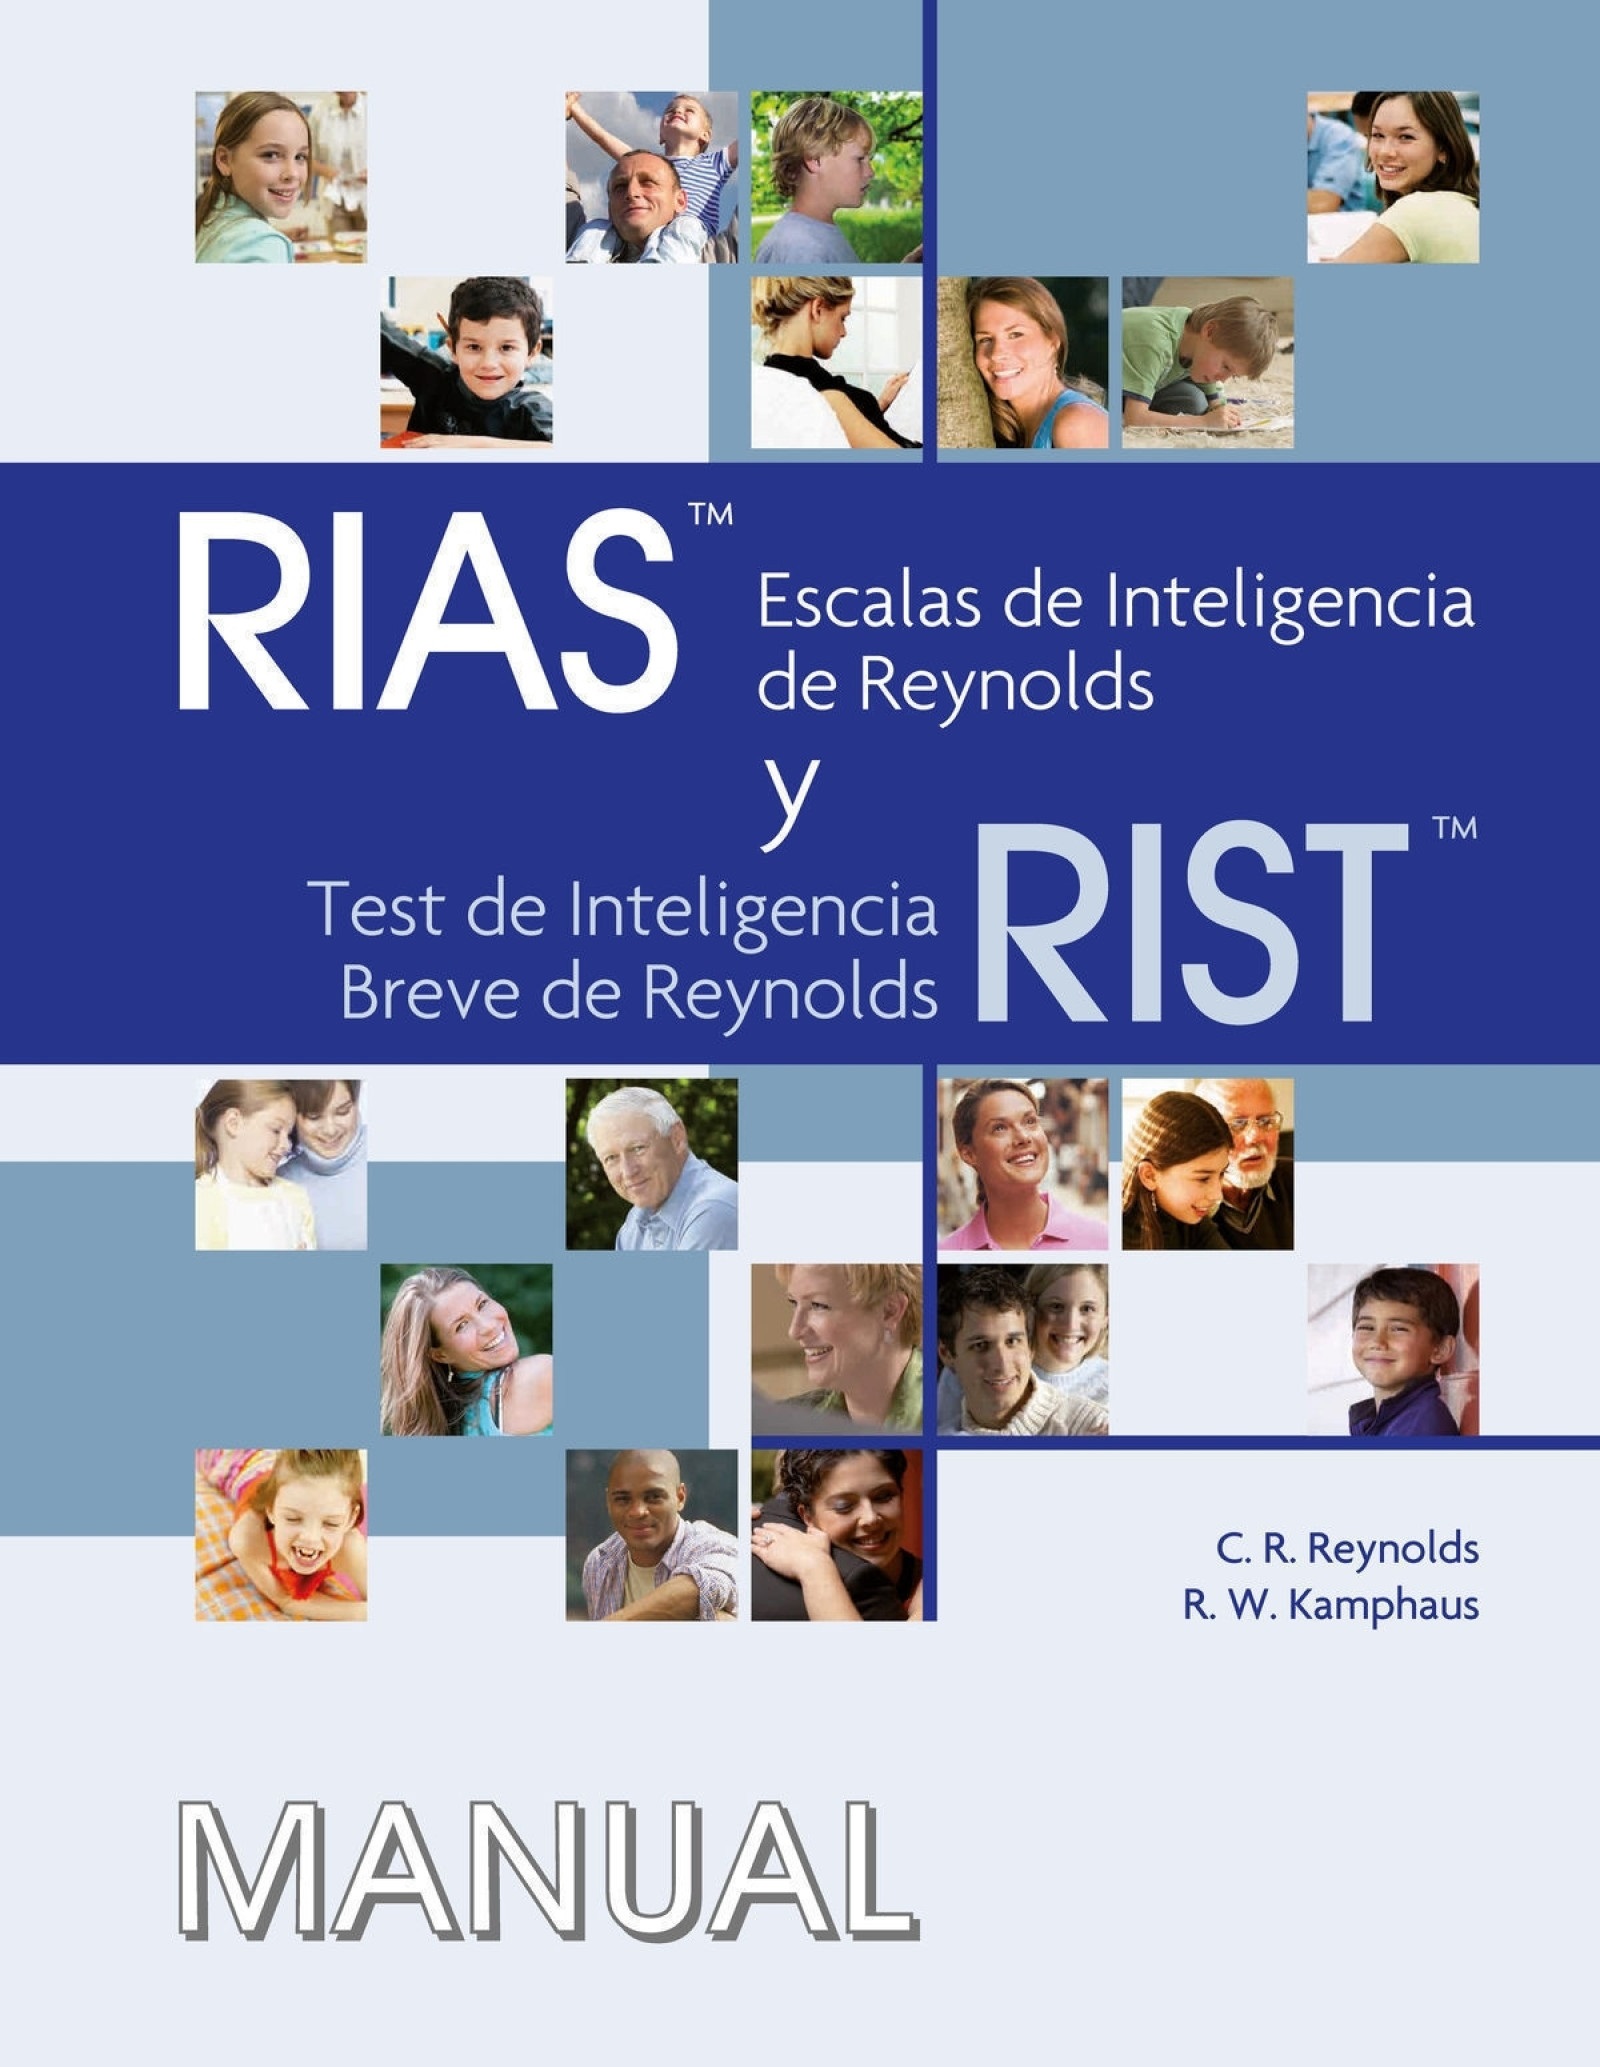 RIST - Teste Breve de Inteligência de Reynolds